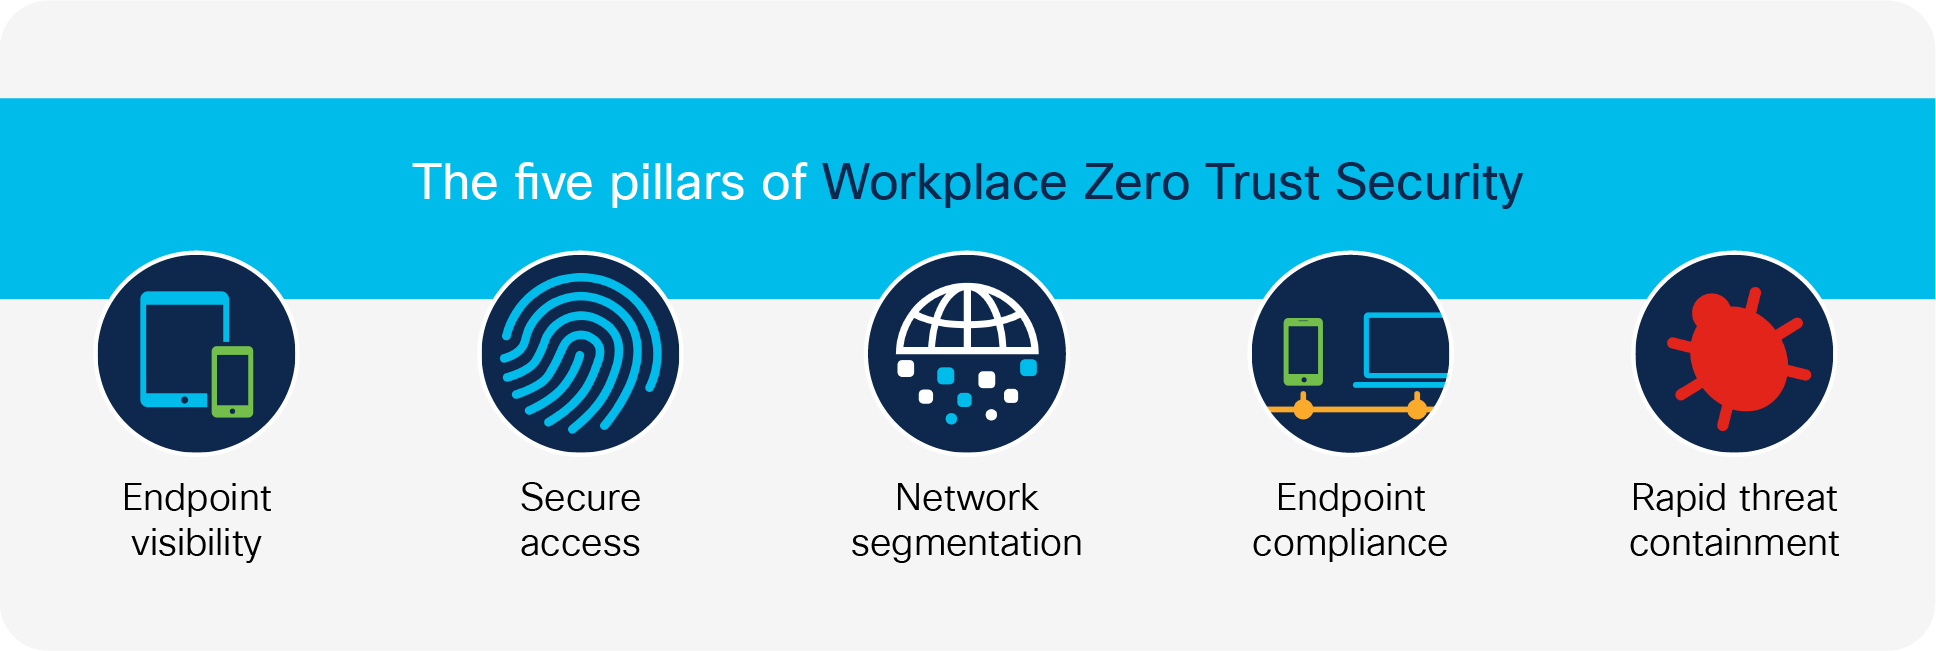 The five pillars of Workplace Zero Trust Security